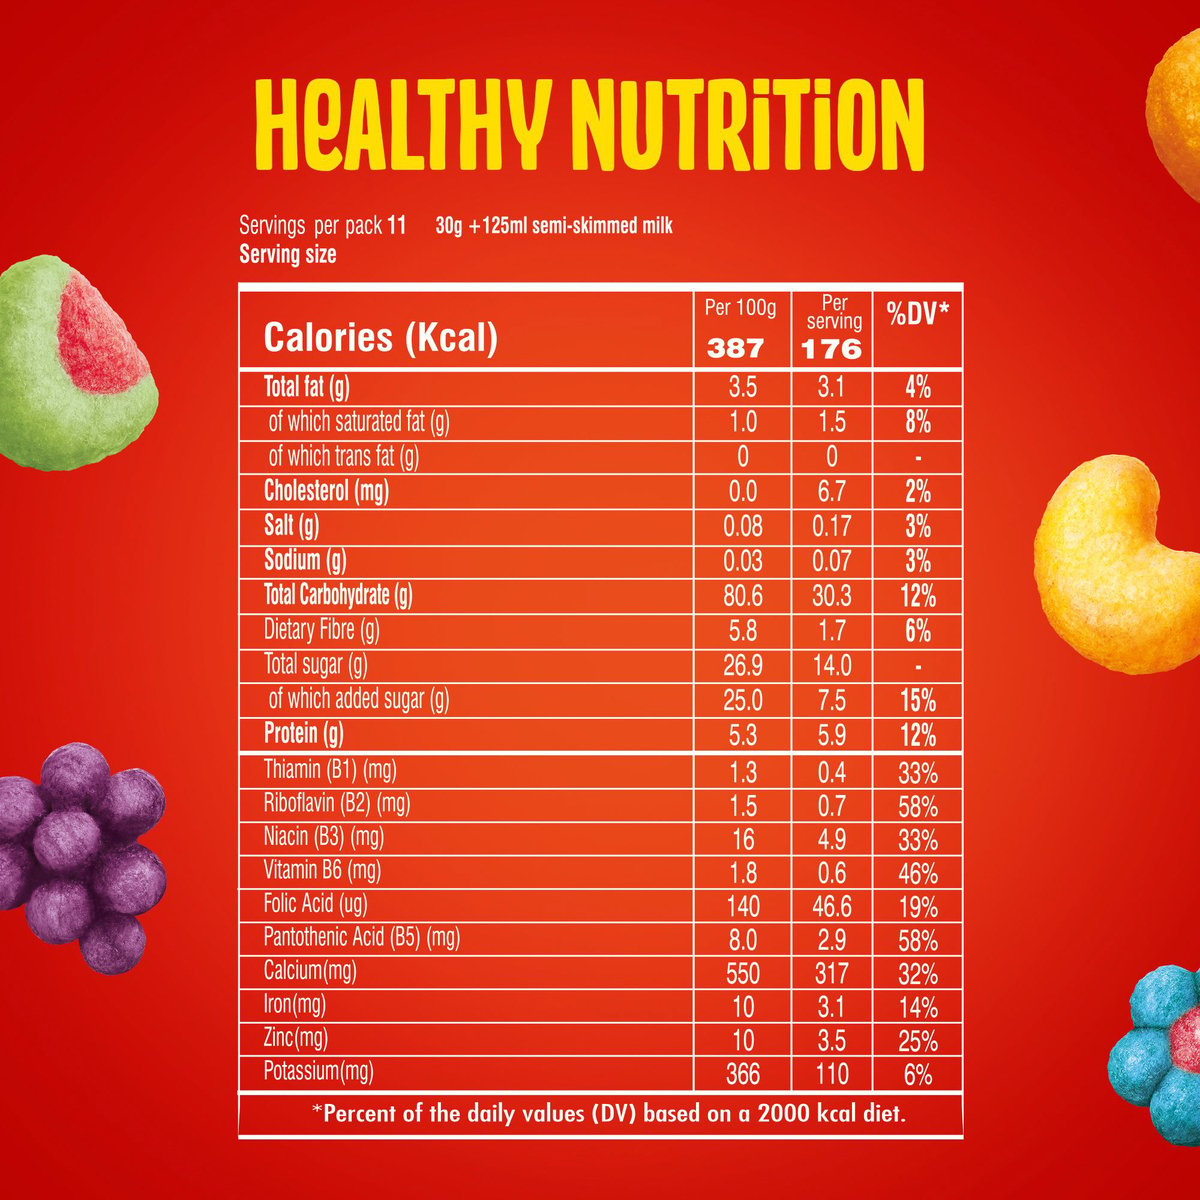 Nestle Trix 6 Fruity Shapes Value Pack 2 x 330 g